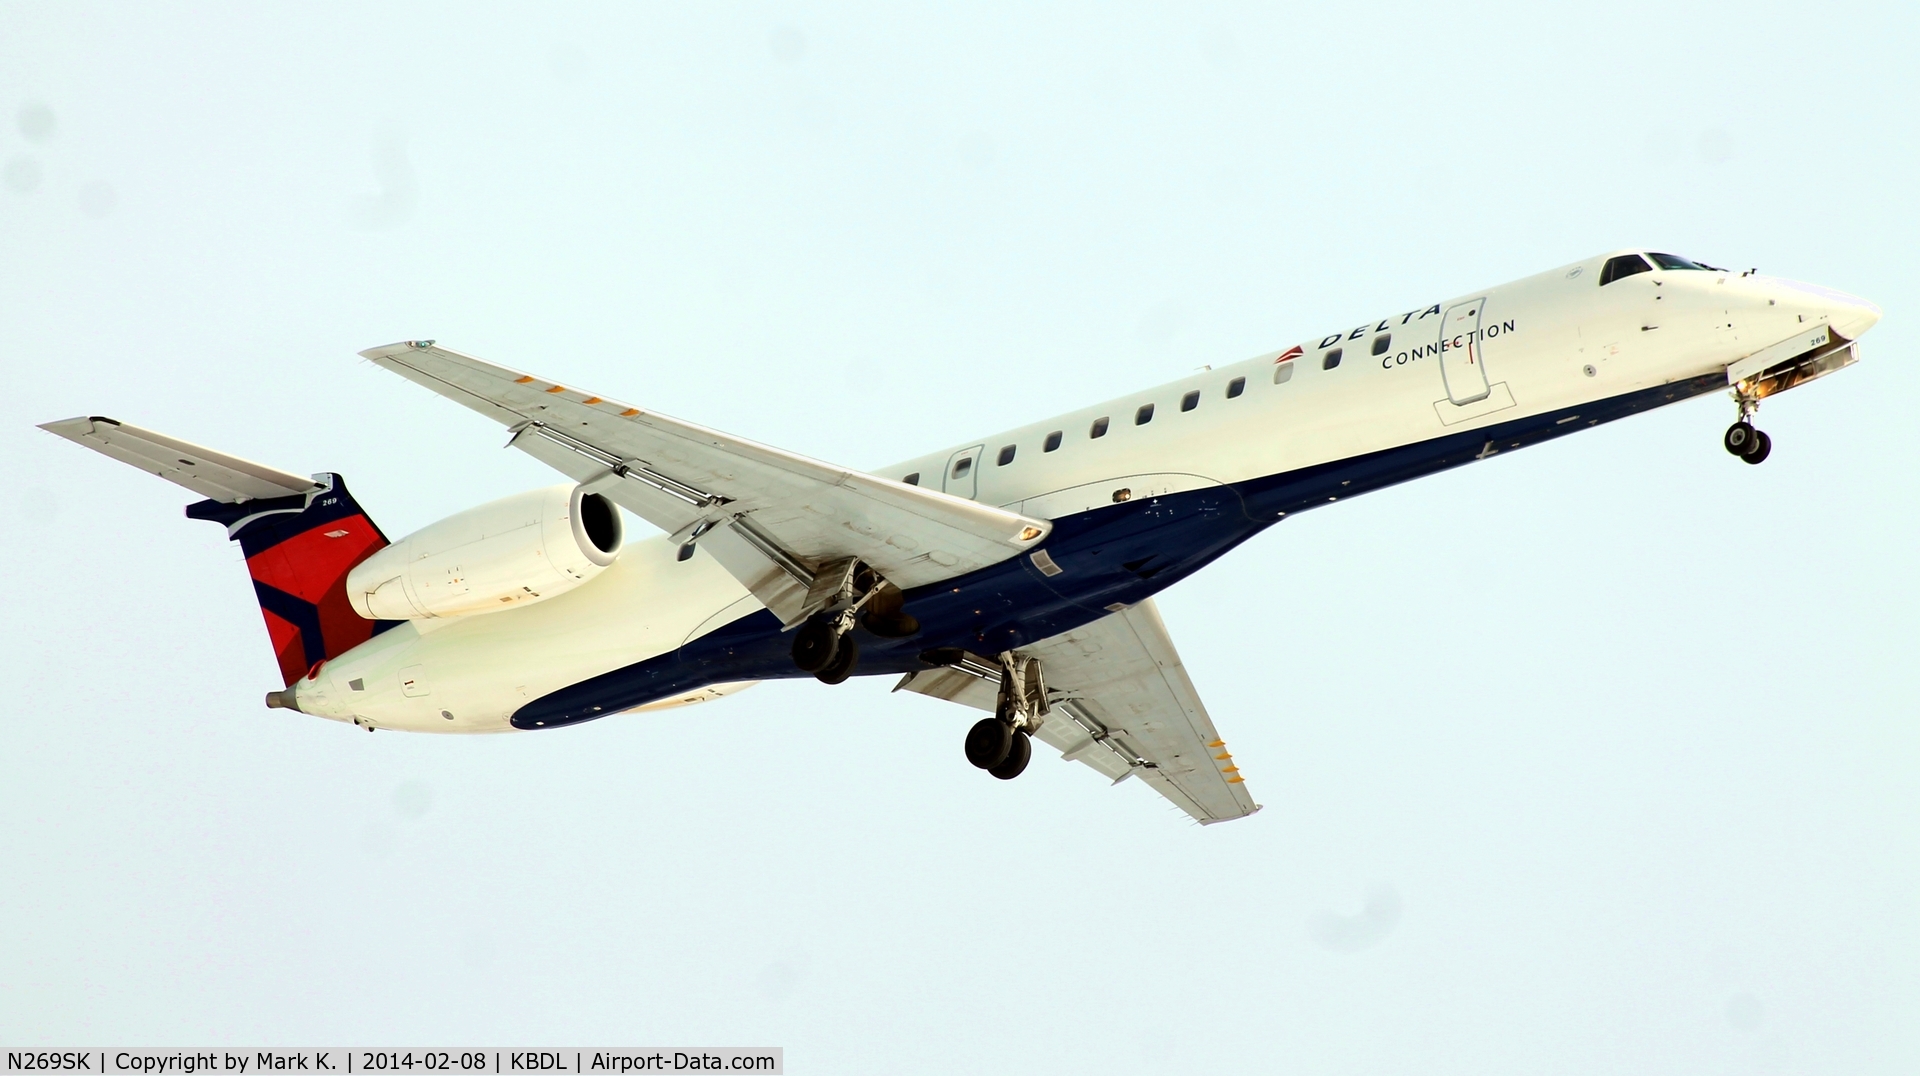 N269SK, 2000 Embraer EMB-145LR C/N 145293, Chautauqua 6360, an Embraer EMB-145LR, on final for runway 24 from Detroit, Michigan (KDTW).